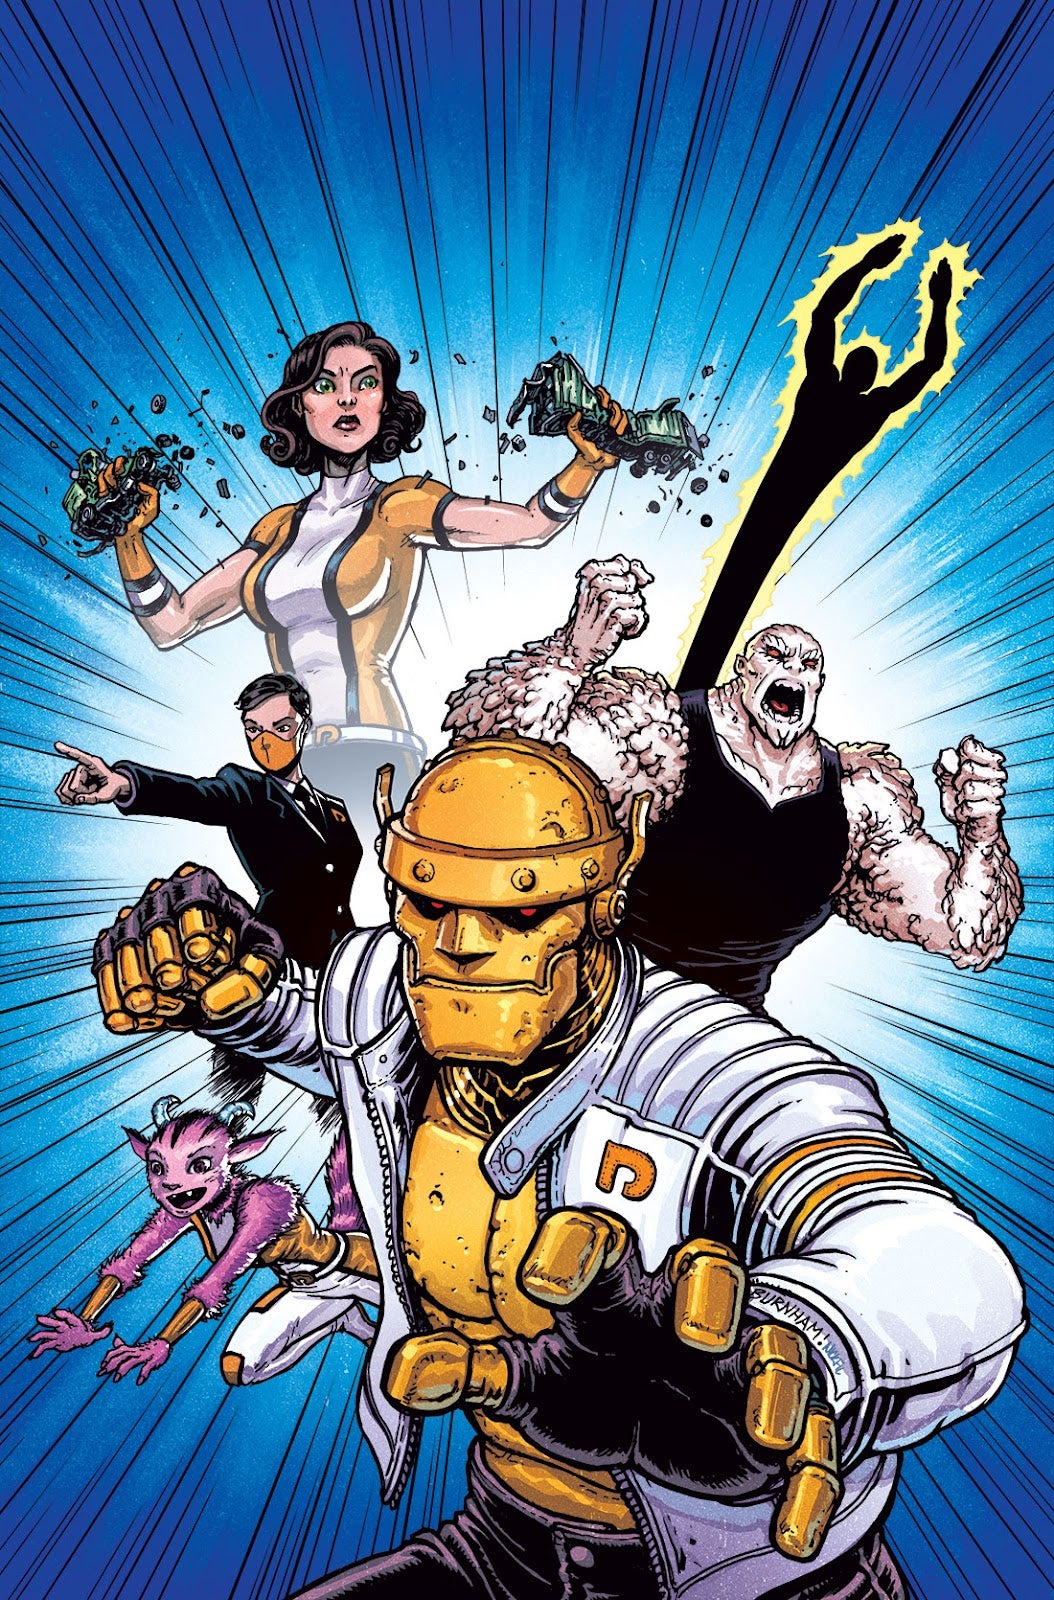 Unstoppable Doom Patrol #1 cover by Chris Burnham. (Image: DC Comics)